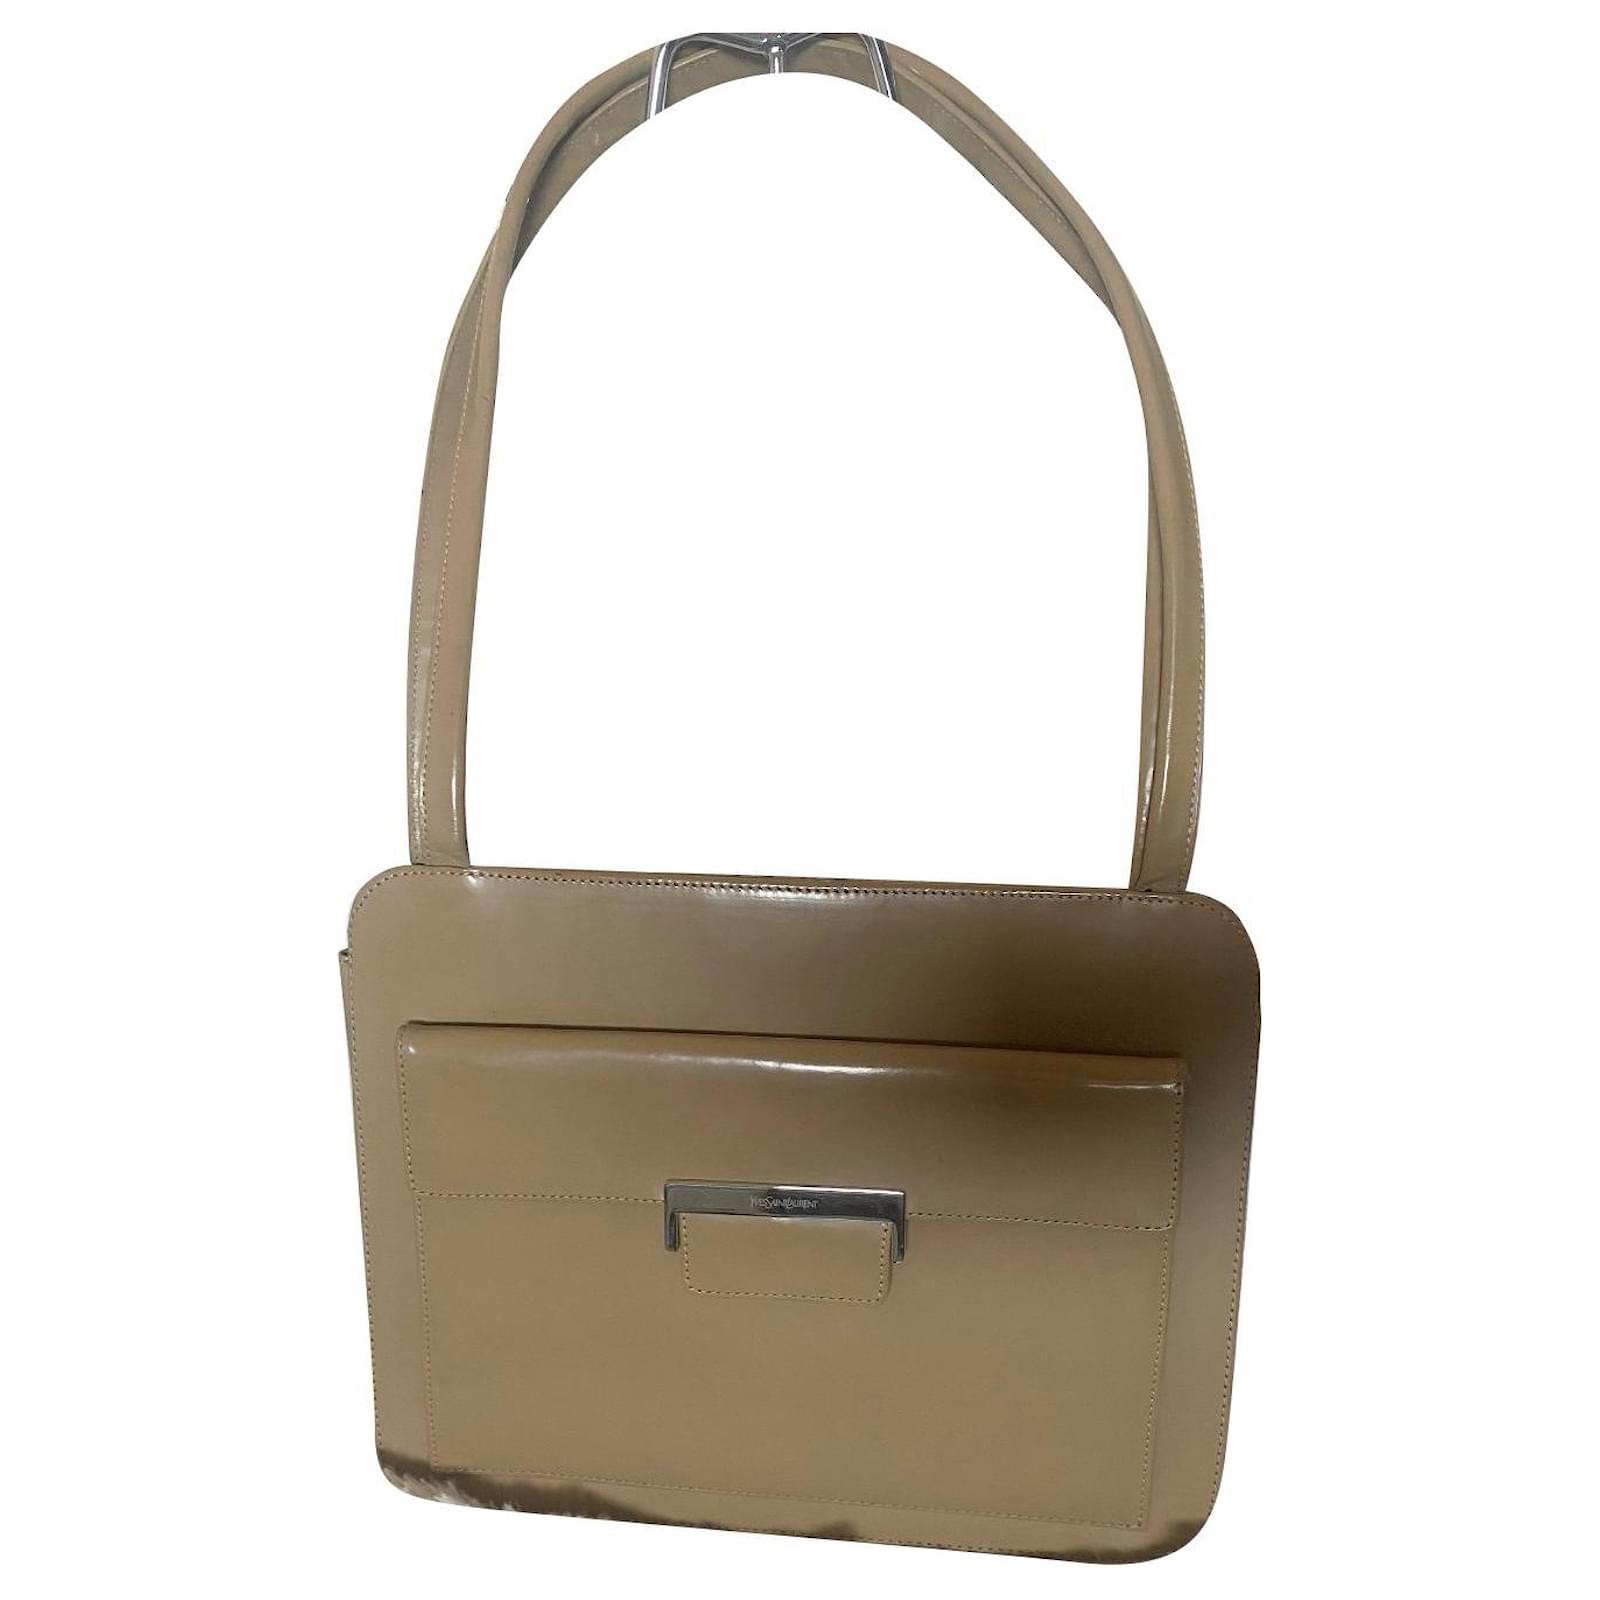 Beige Patent Leather Handbag